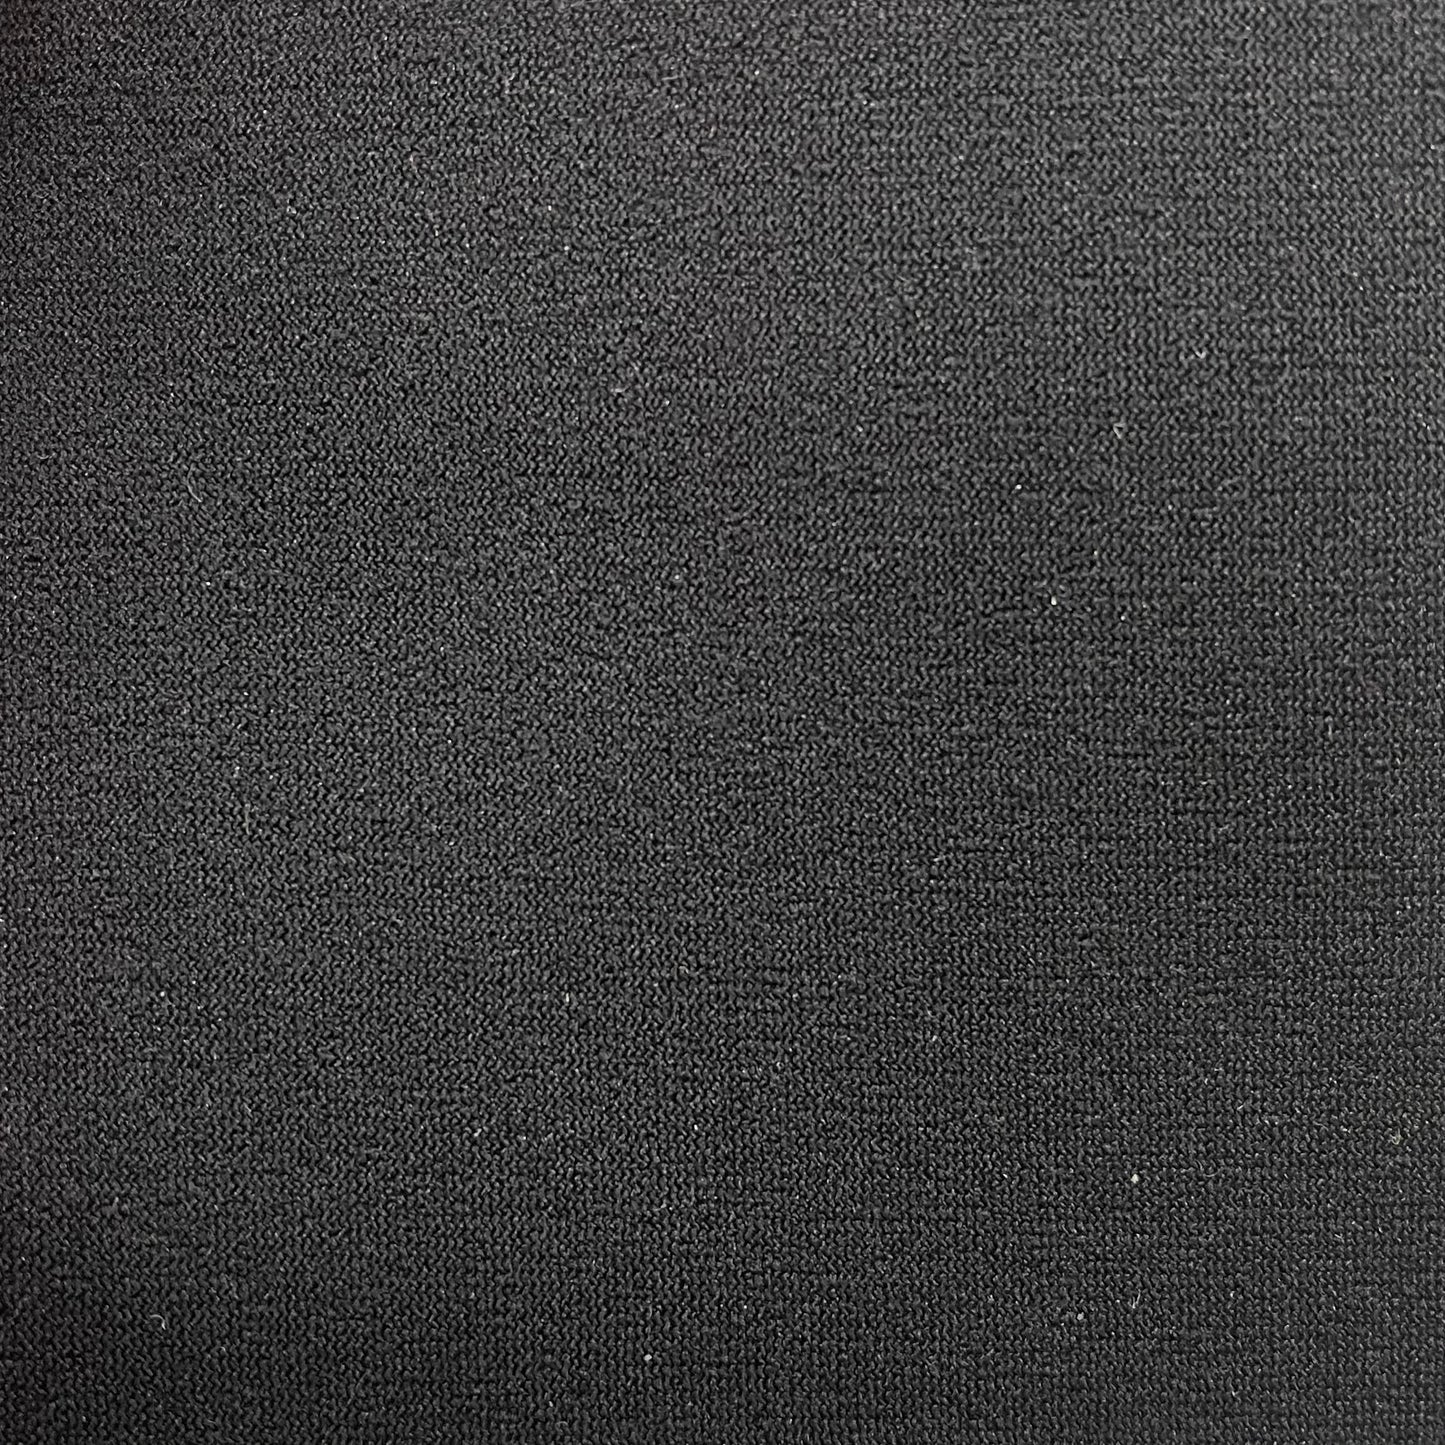 3.0mm L Foam VAPOR Neoprene Fabric Black / Black (Sold per 1/2 Sheet)